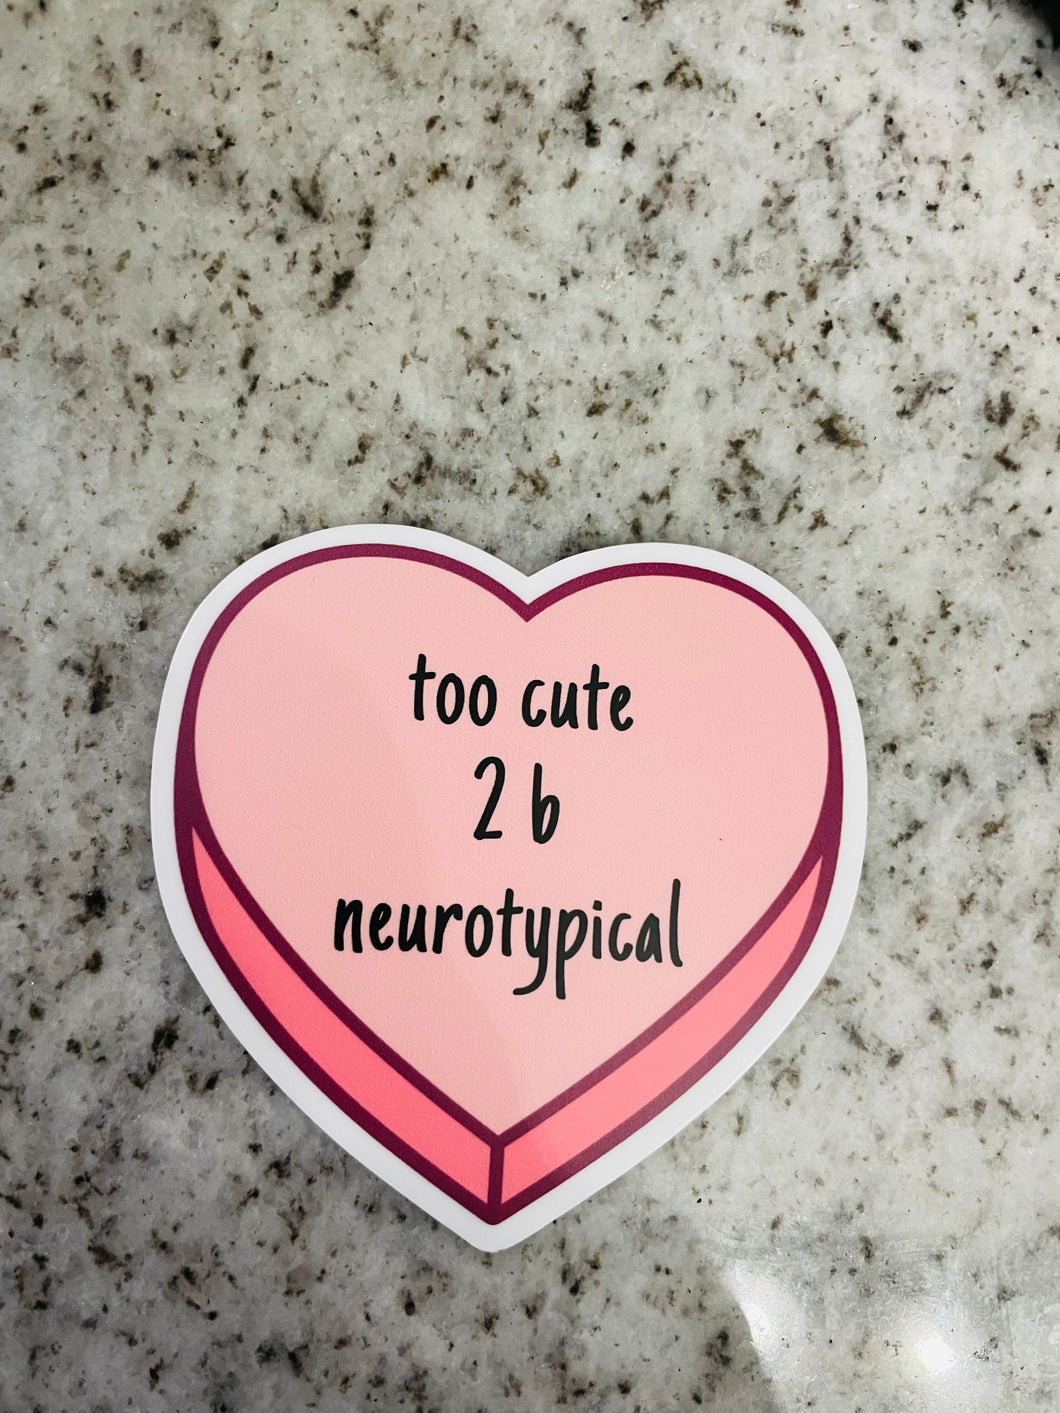 too cute 2 b neurotypical heart sticker